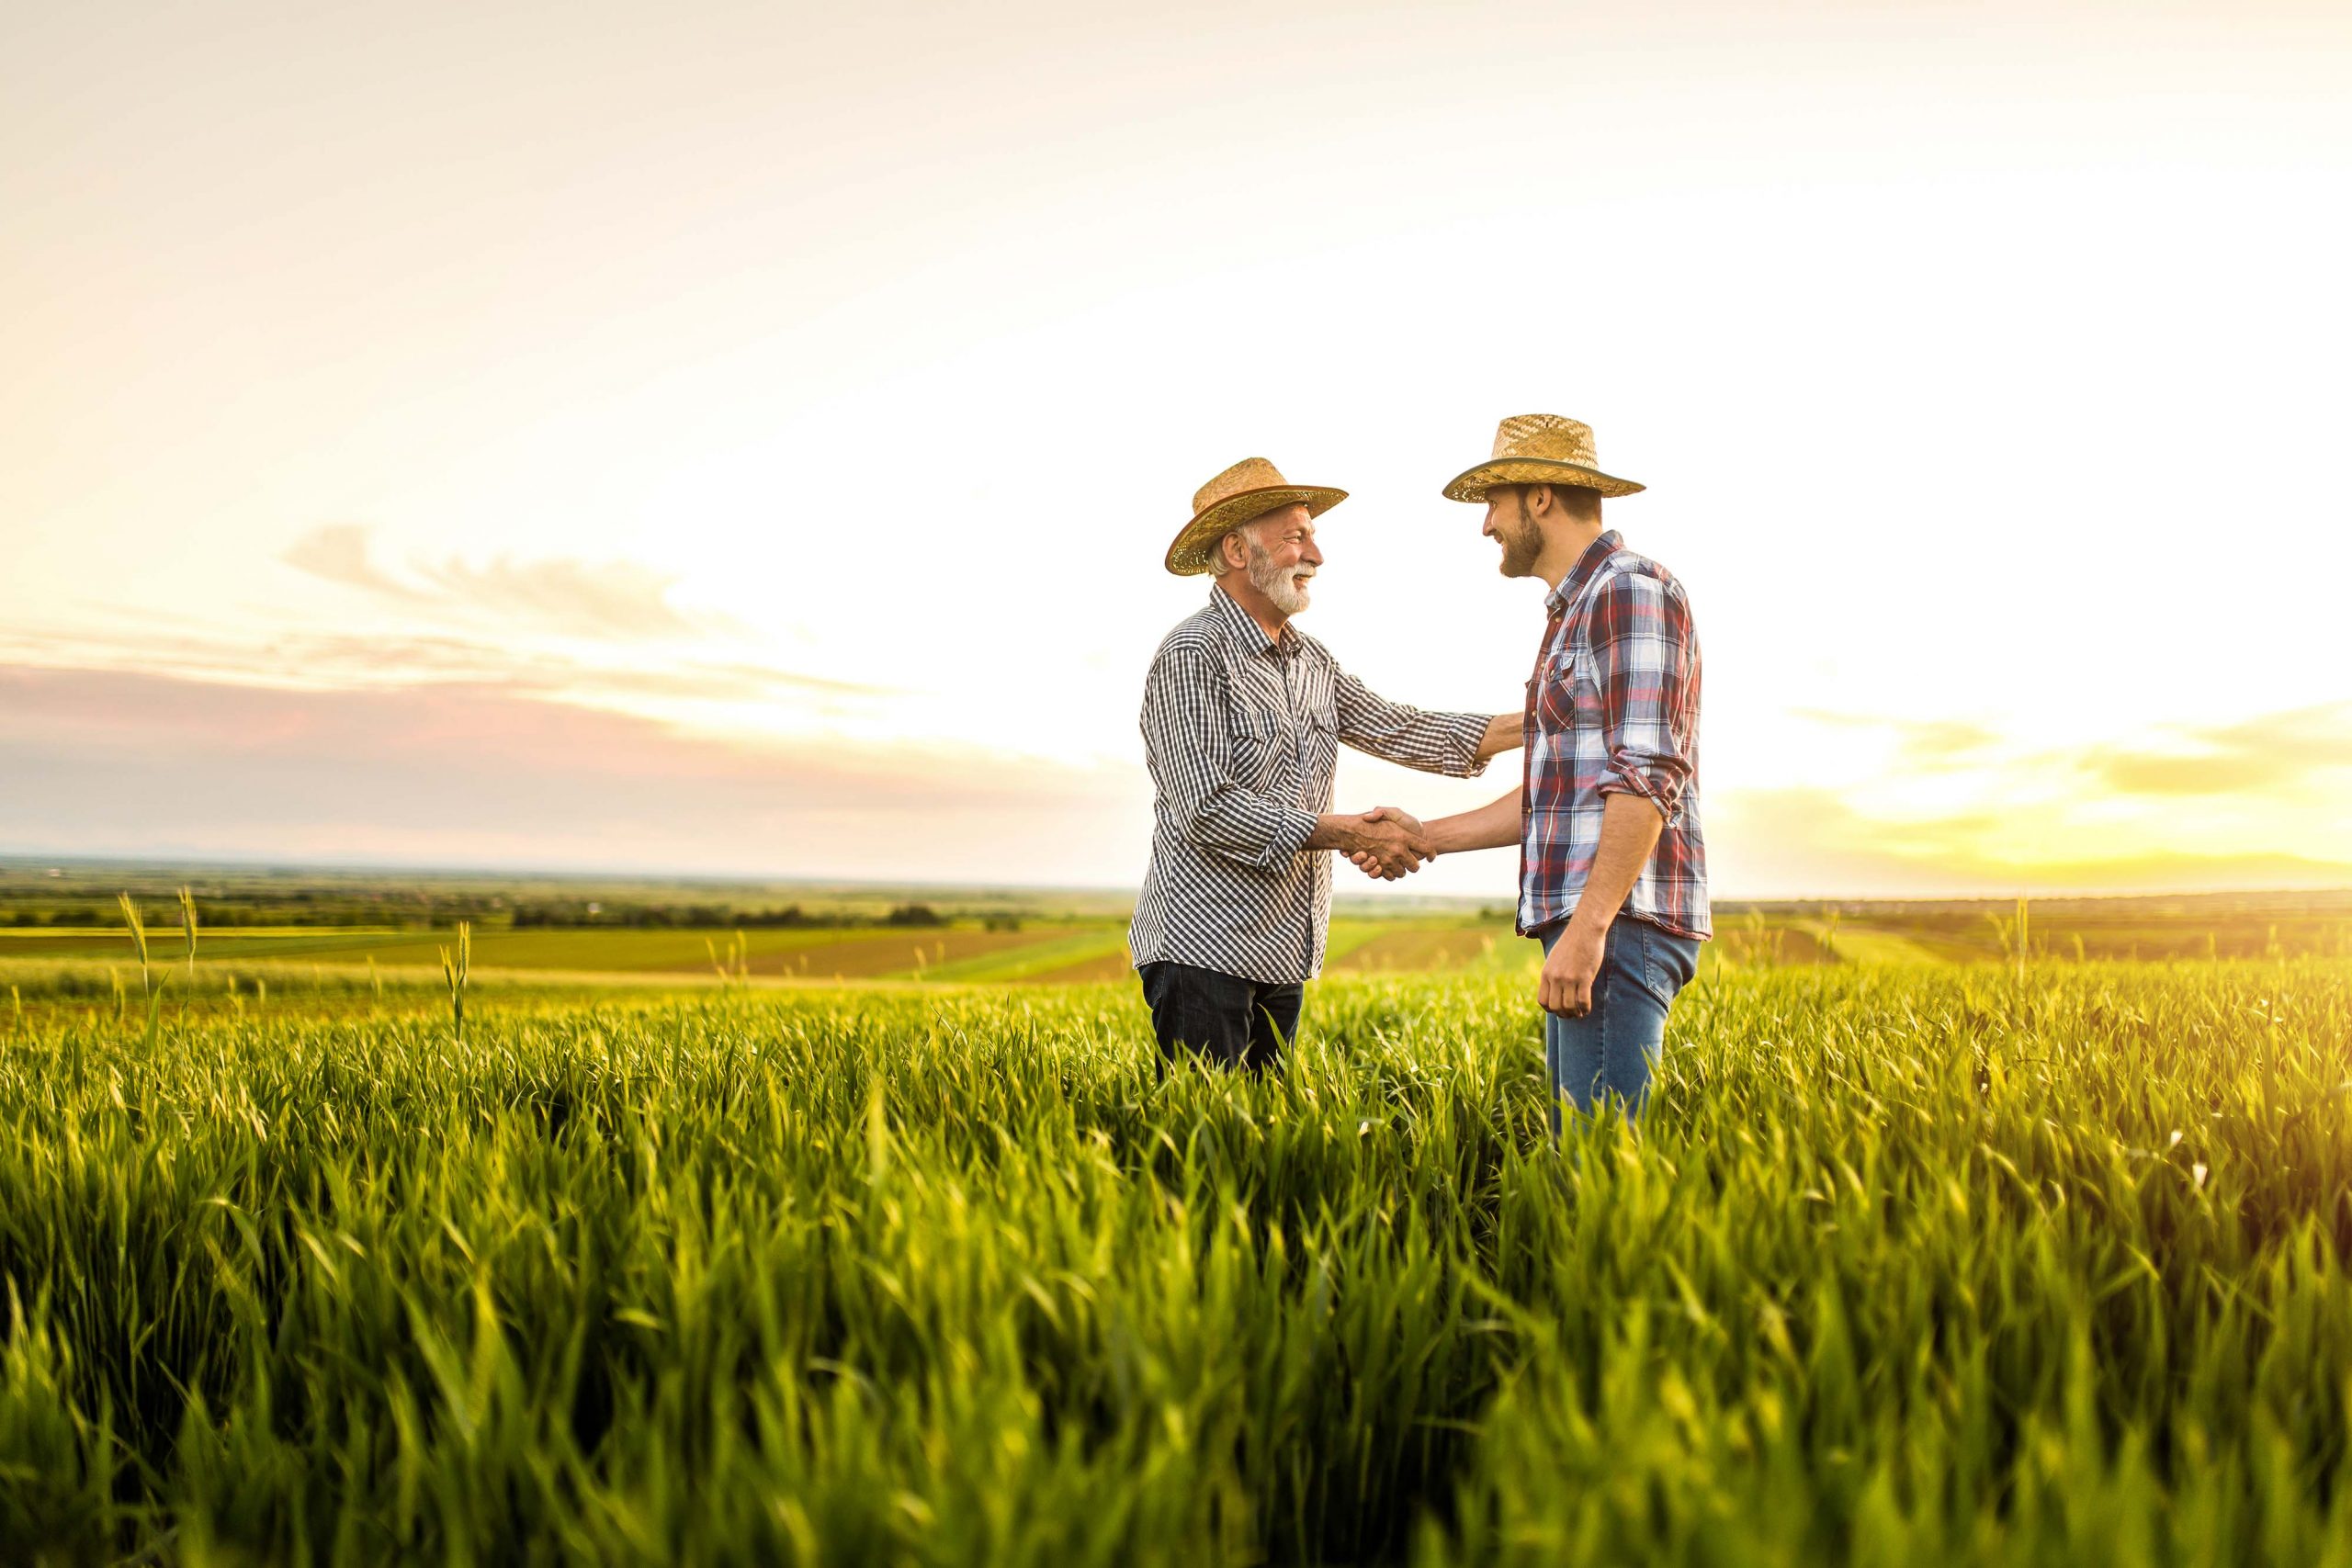 Two farmers shaking hands in a field.